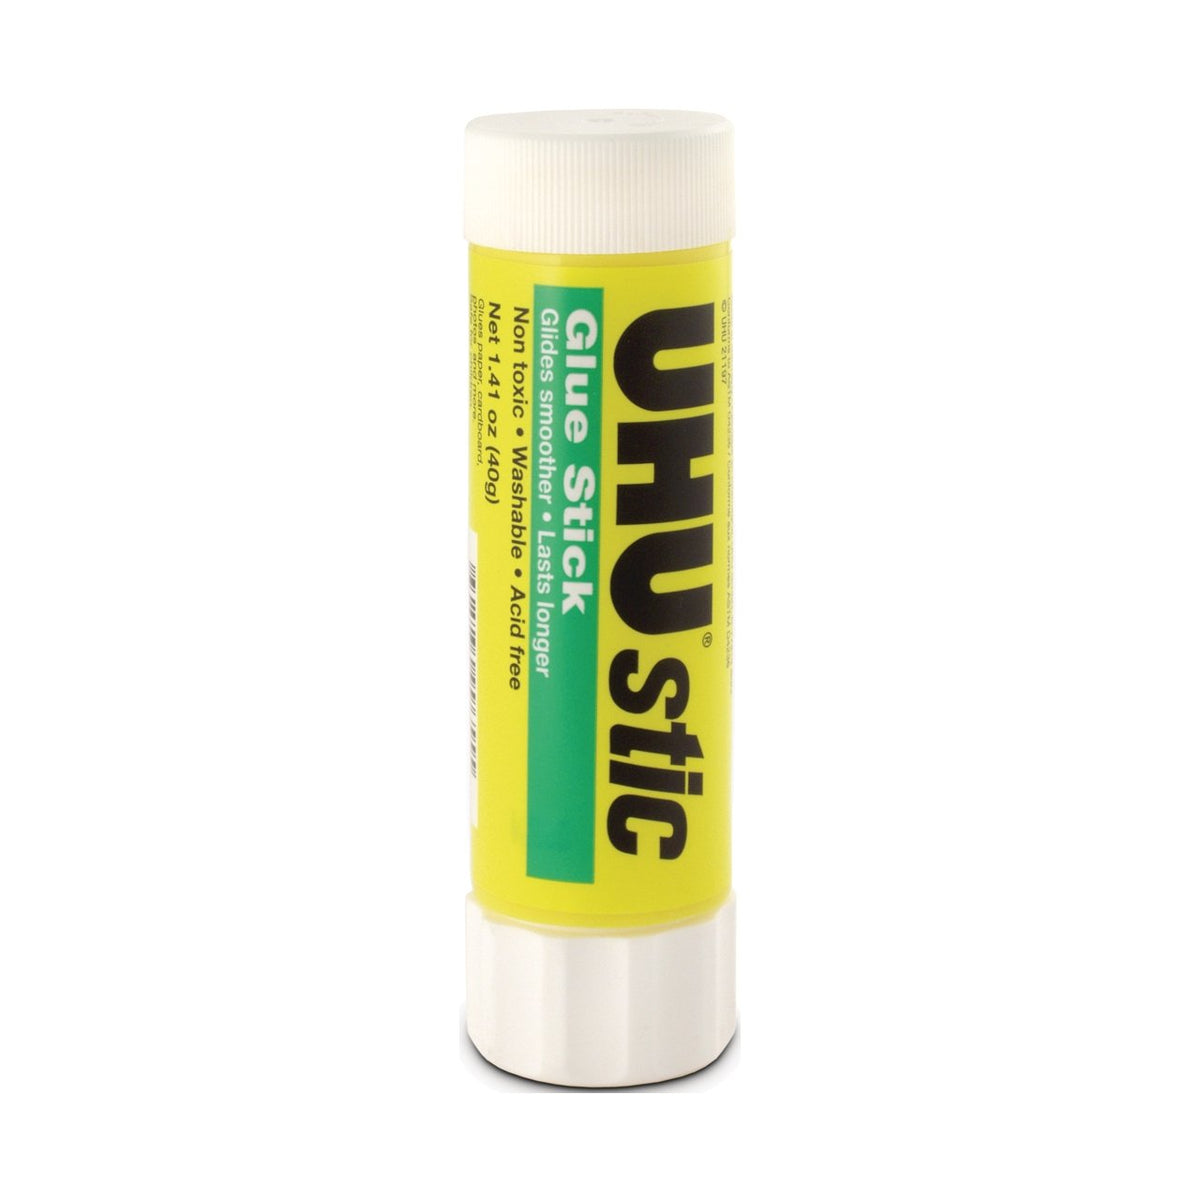 UHU Stic Clear Glue Stick - JUMBO 1.41 oz. - merriartist.com